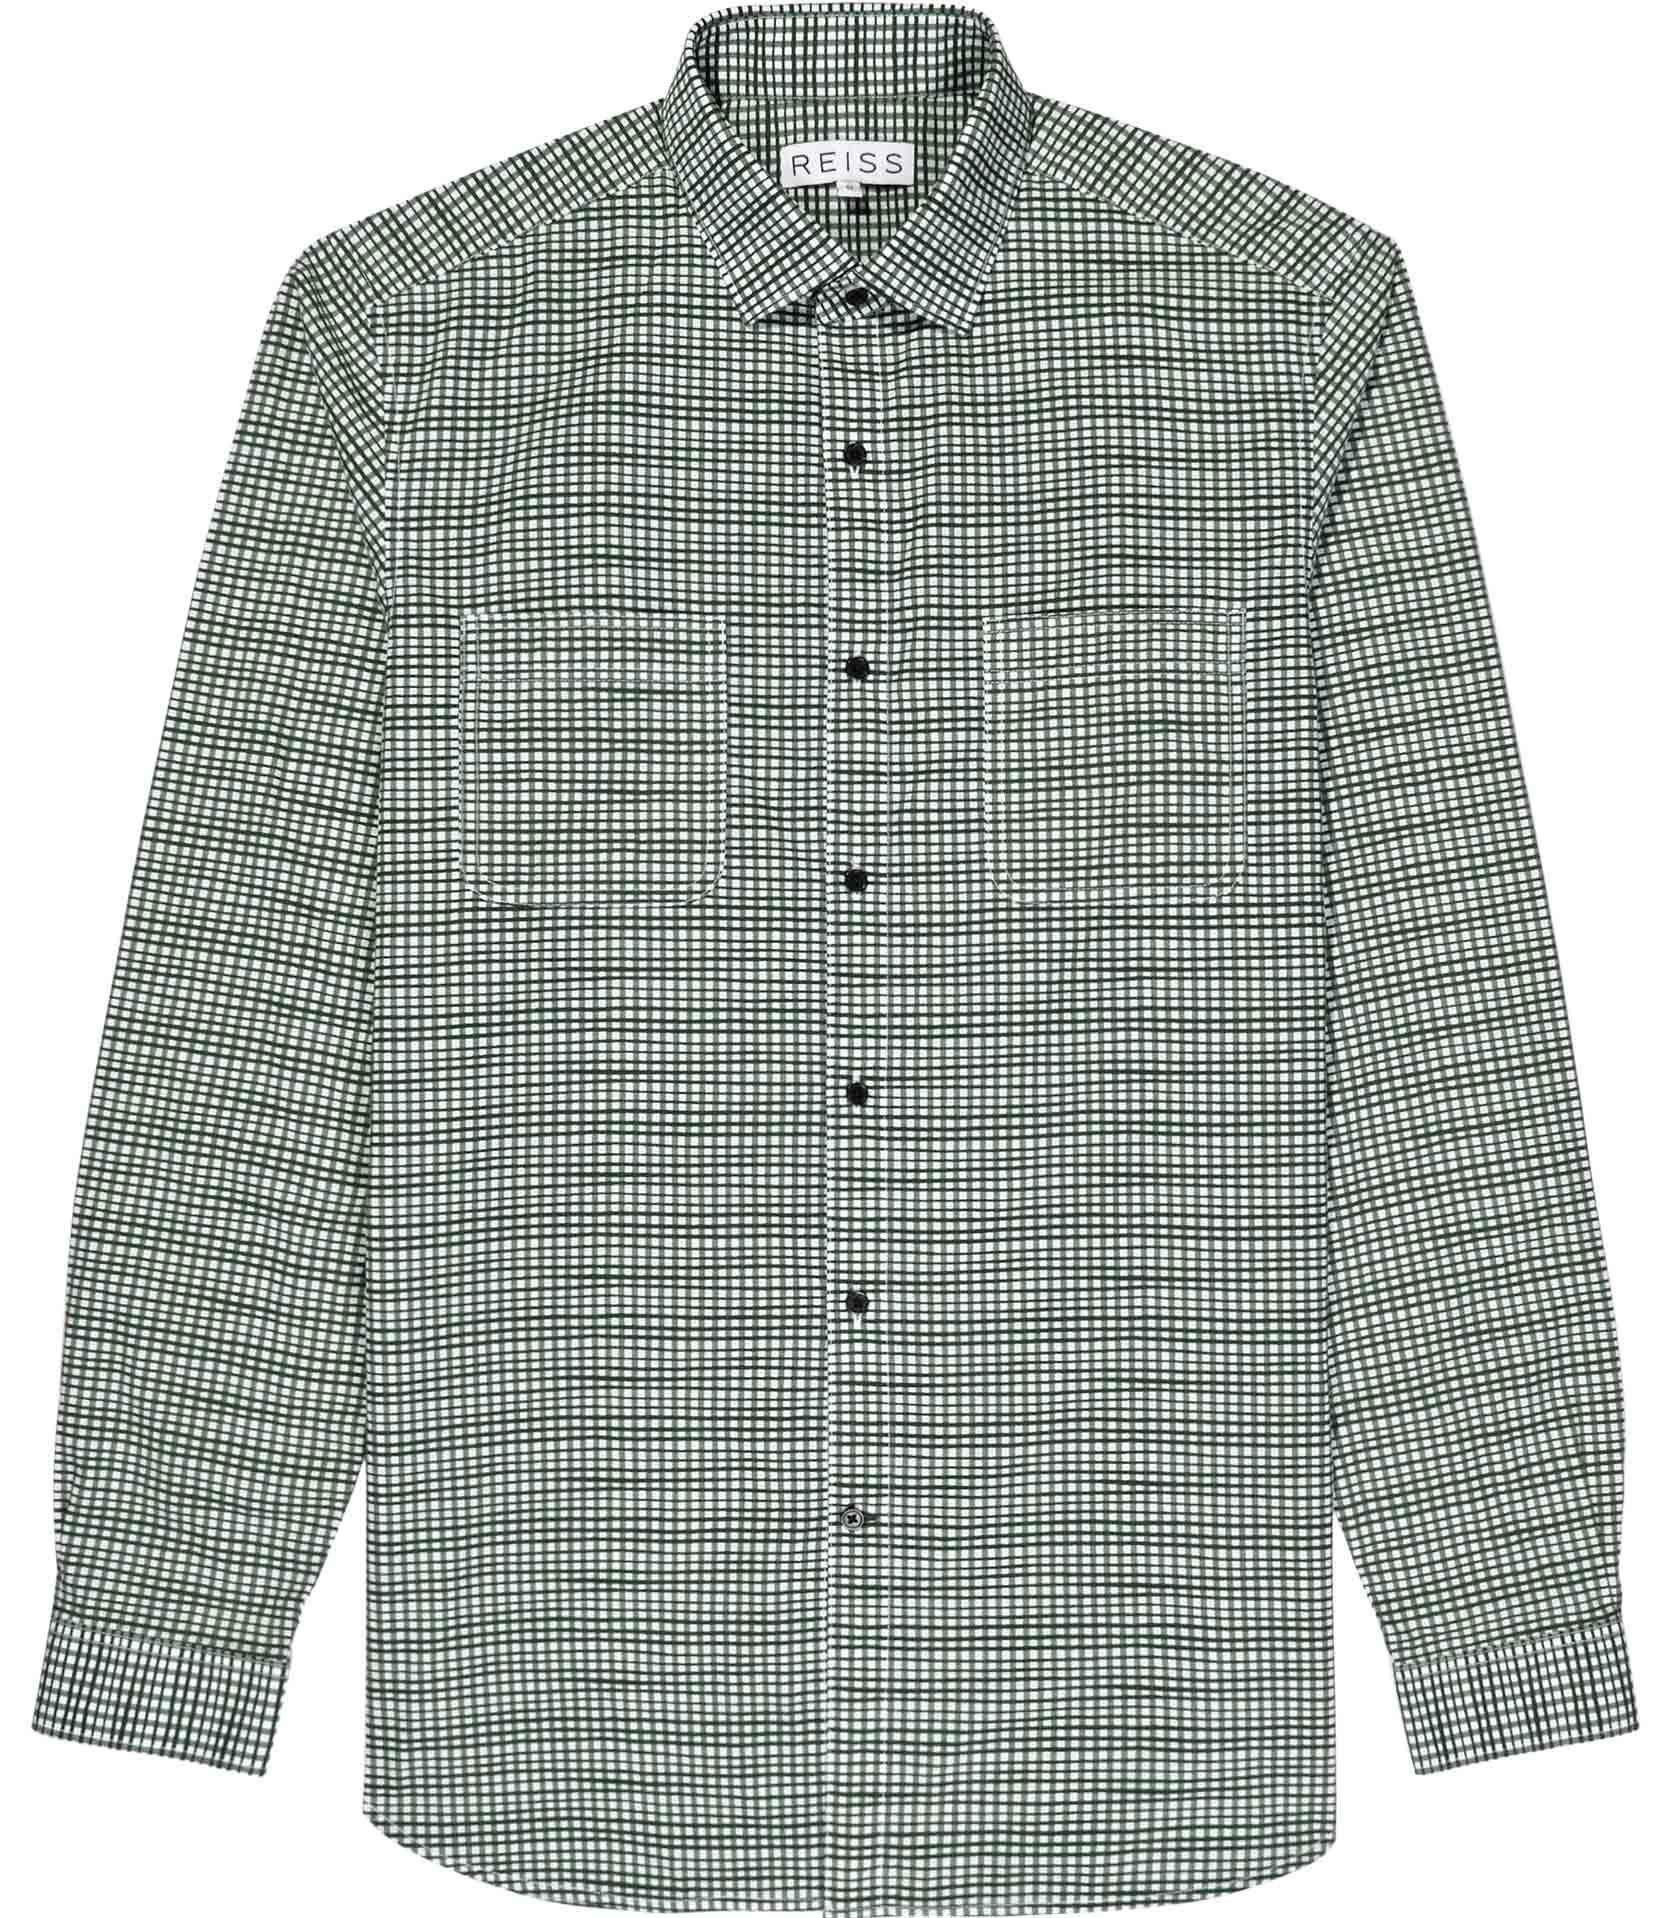 Lyst - Reiss Chronicle Check Long Sleeve Shirt in Green for Men